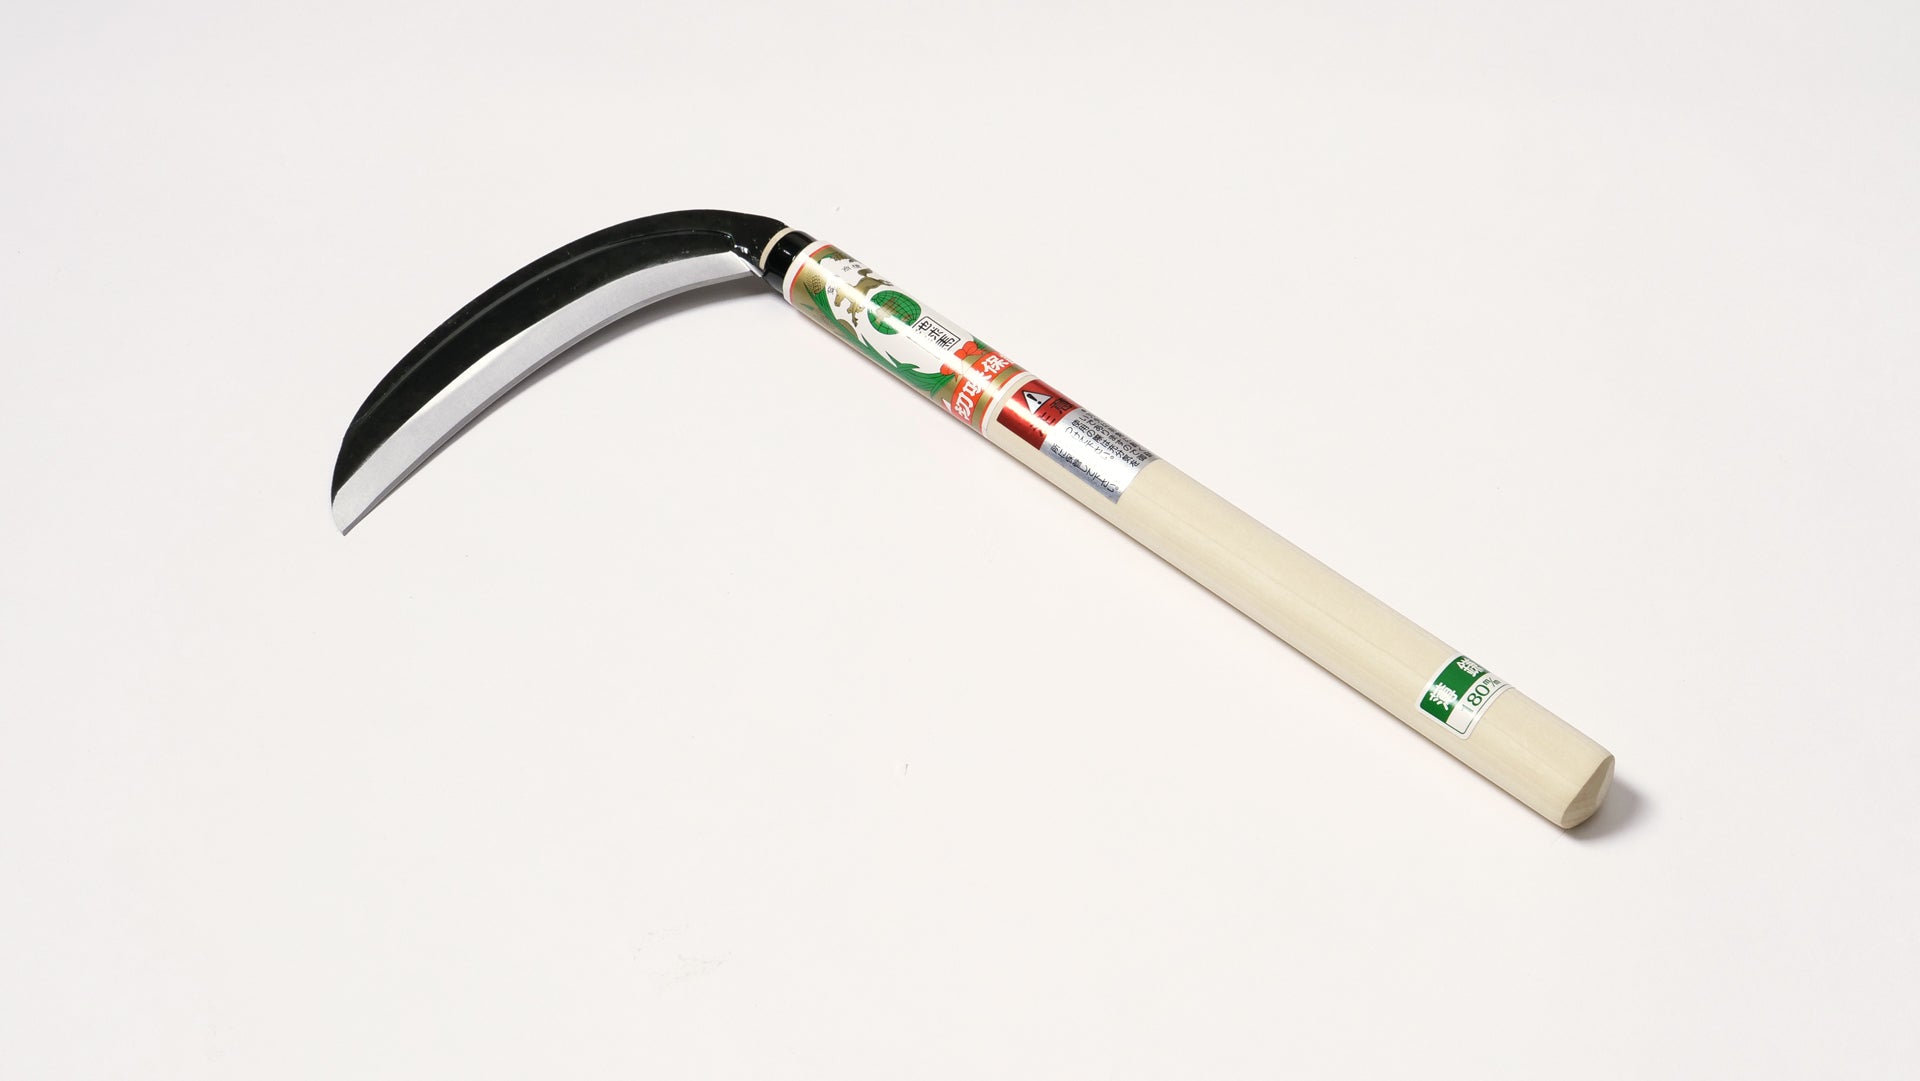 Chikyuma Japanese Weeding Sickle (Thin Blade) 7.09 in (180 mm) - Japanese Gardening Tools